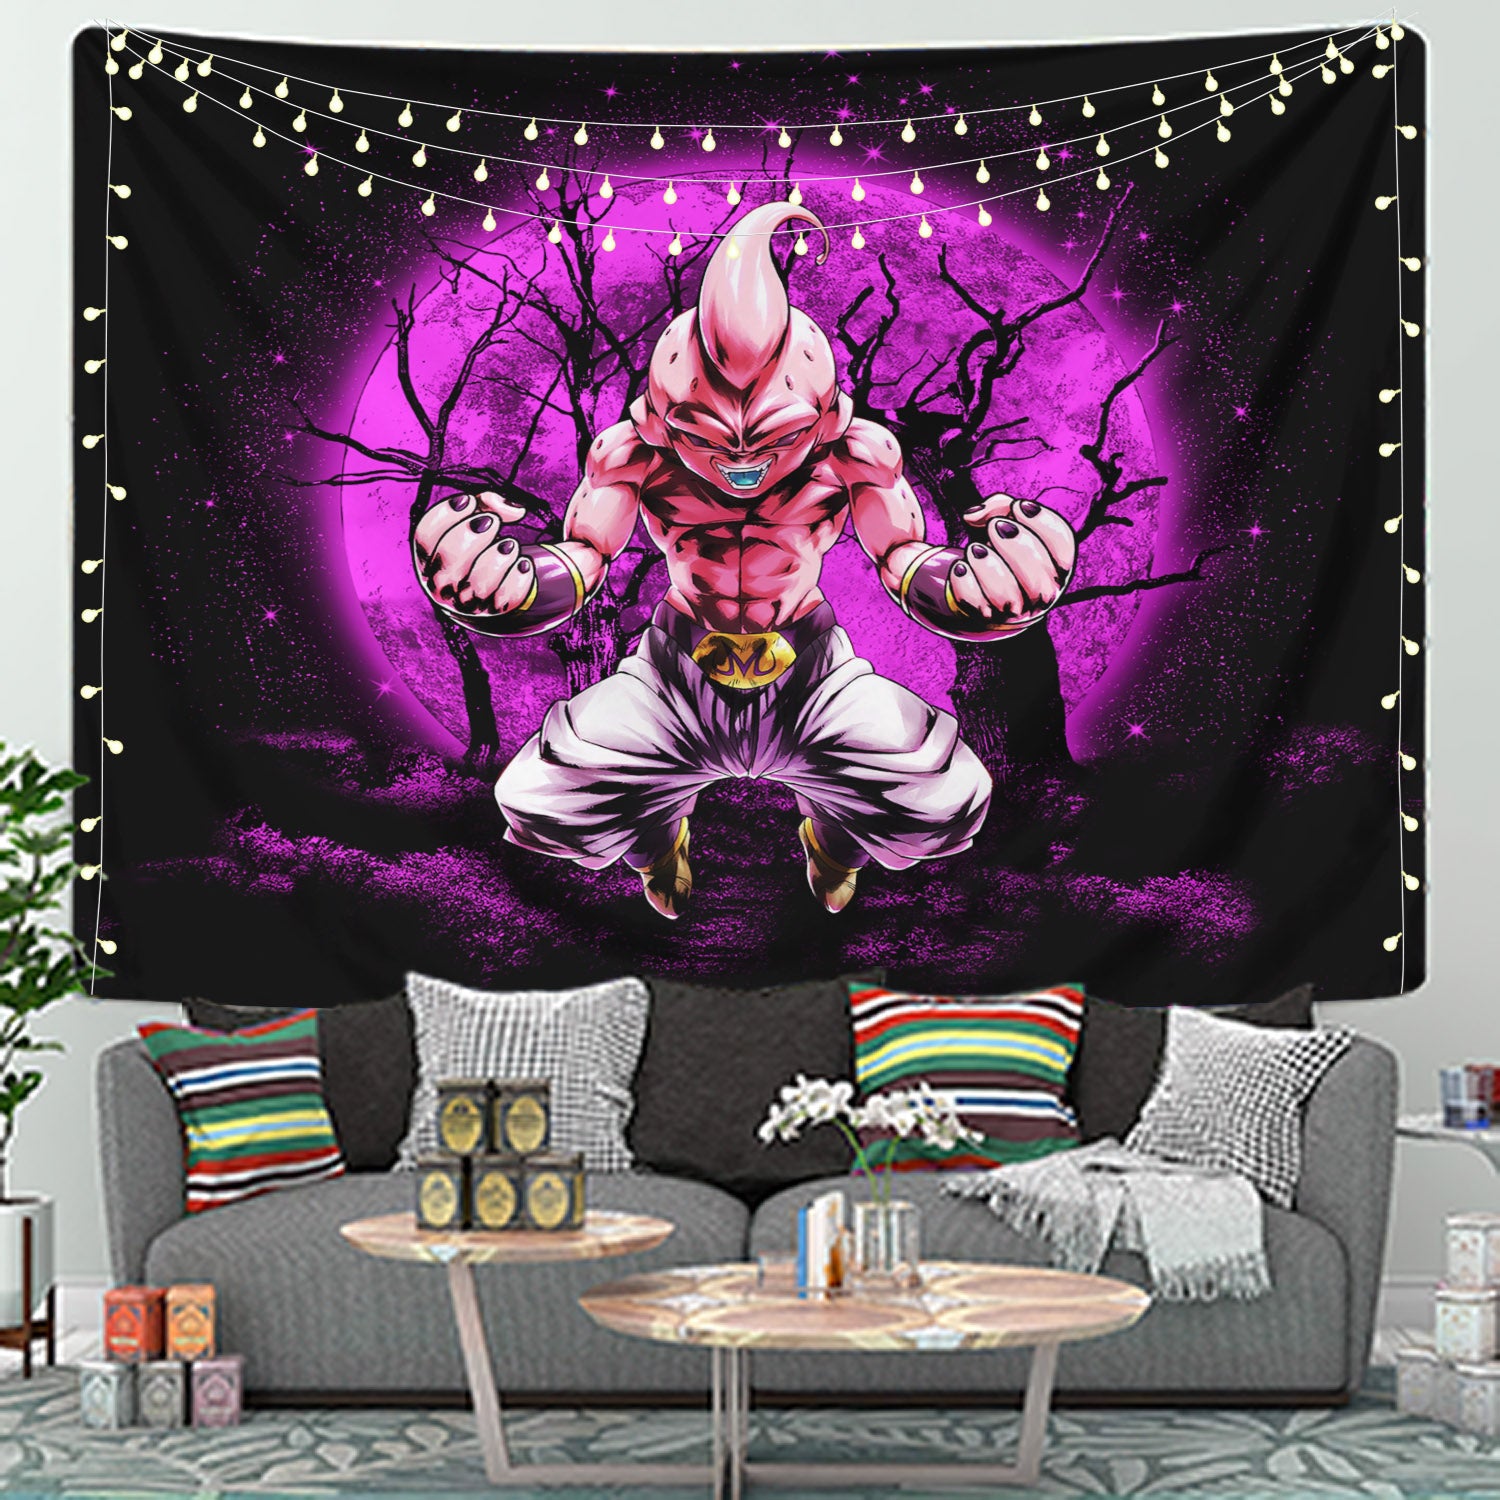 Kidbuu Dragon Ball Moonlight Tapestry Room Decor